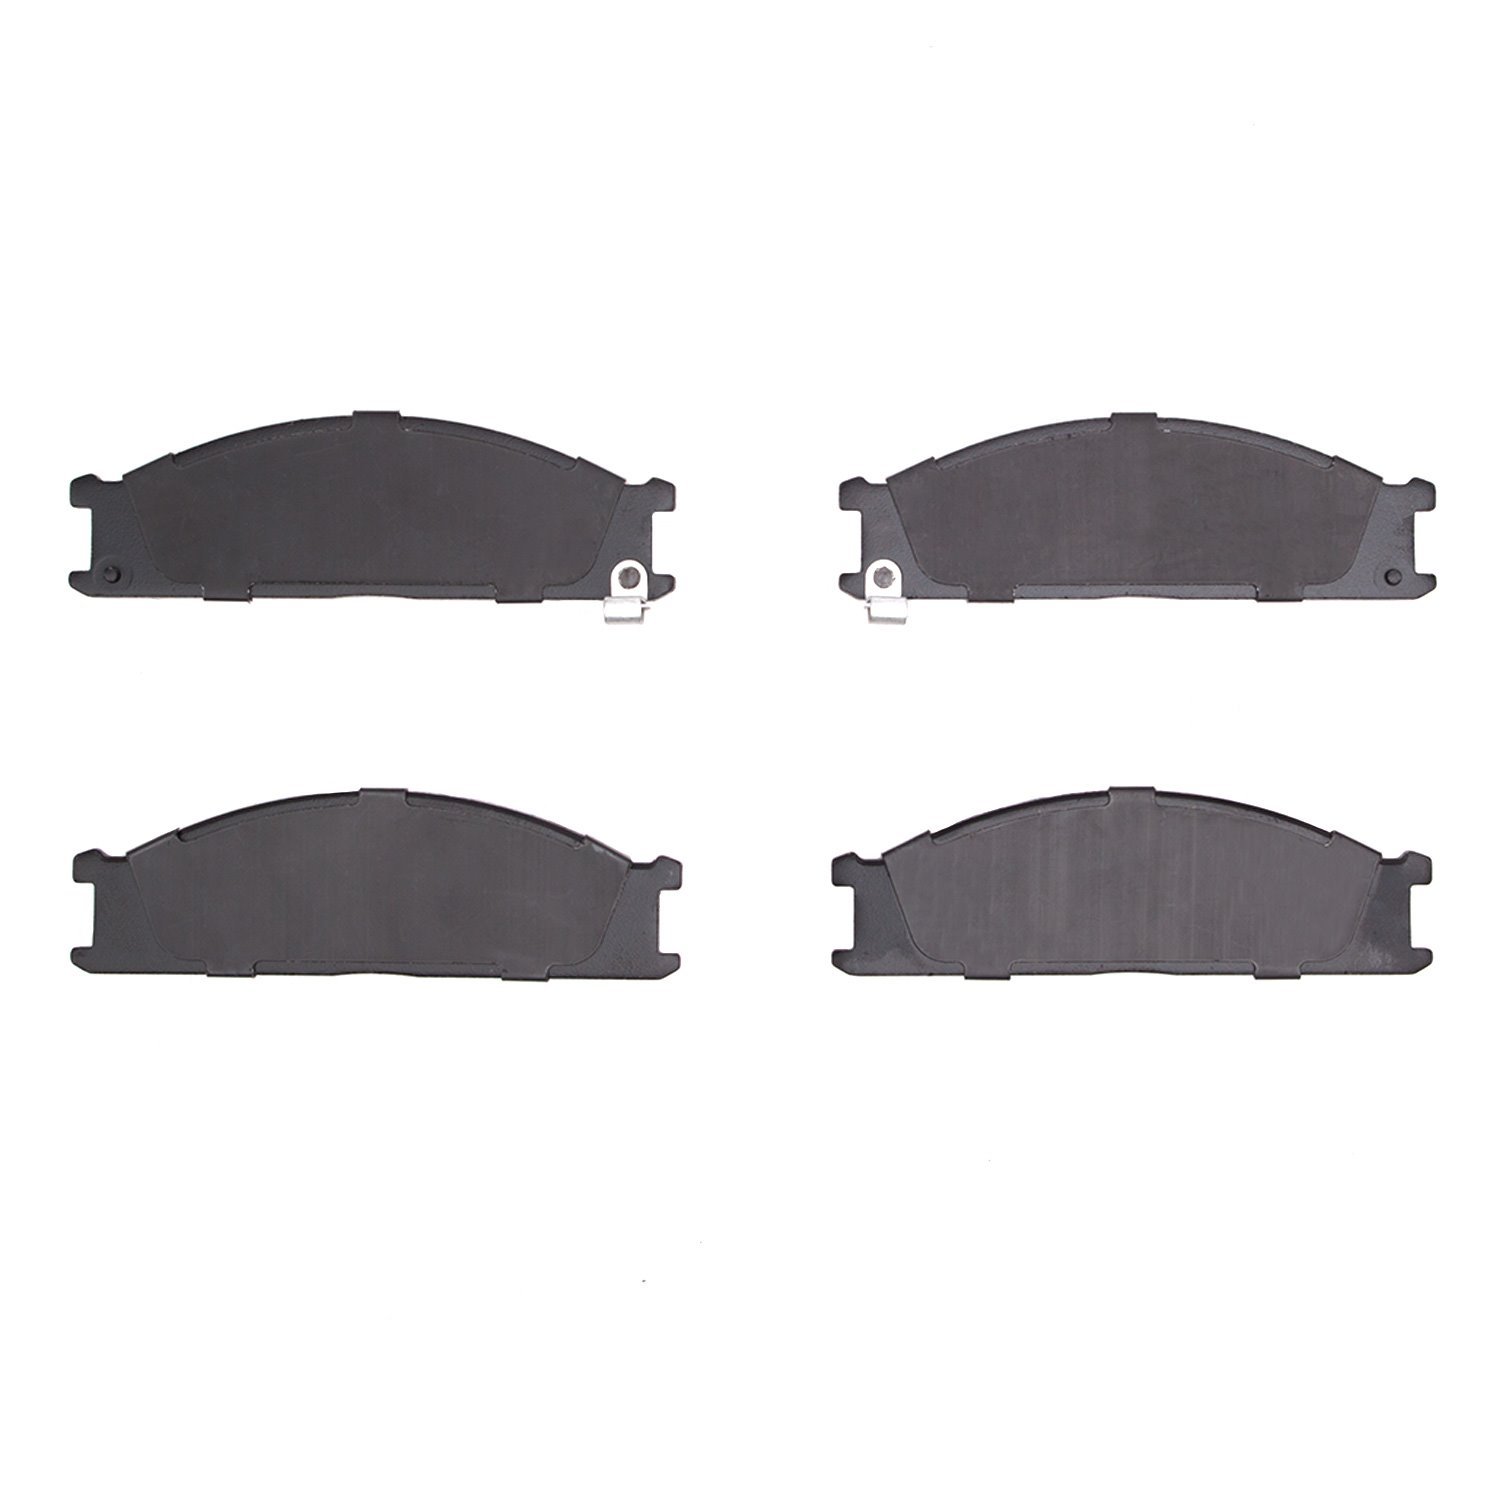 1310-0333-00 3000-Series Ceramic Brake Pads, 1985-2015 Multiple Makes/Models, Position: Front